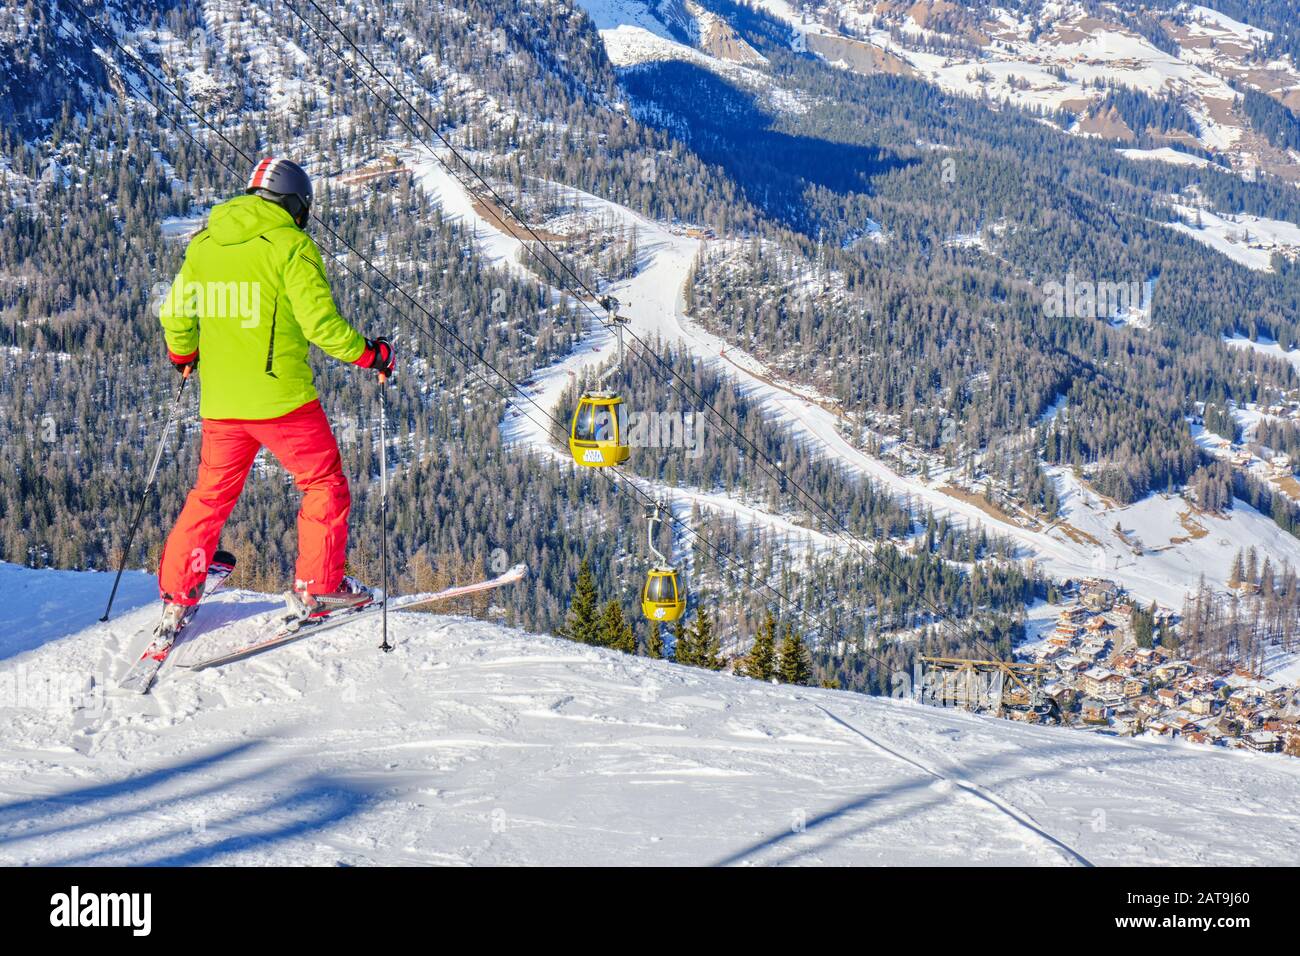 Alta Badia, Italy - January 21, 2020: Skier preparing to drop into a red ski run above La Villa village, South Tyrol, in Dolomites, Italy. Stock Photo